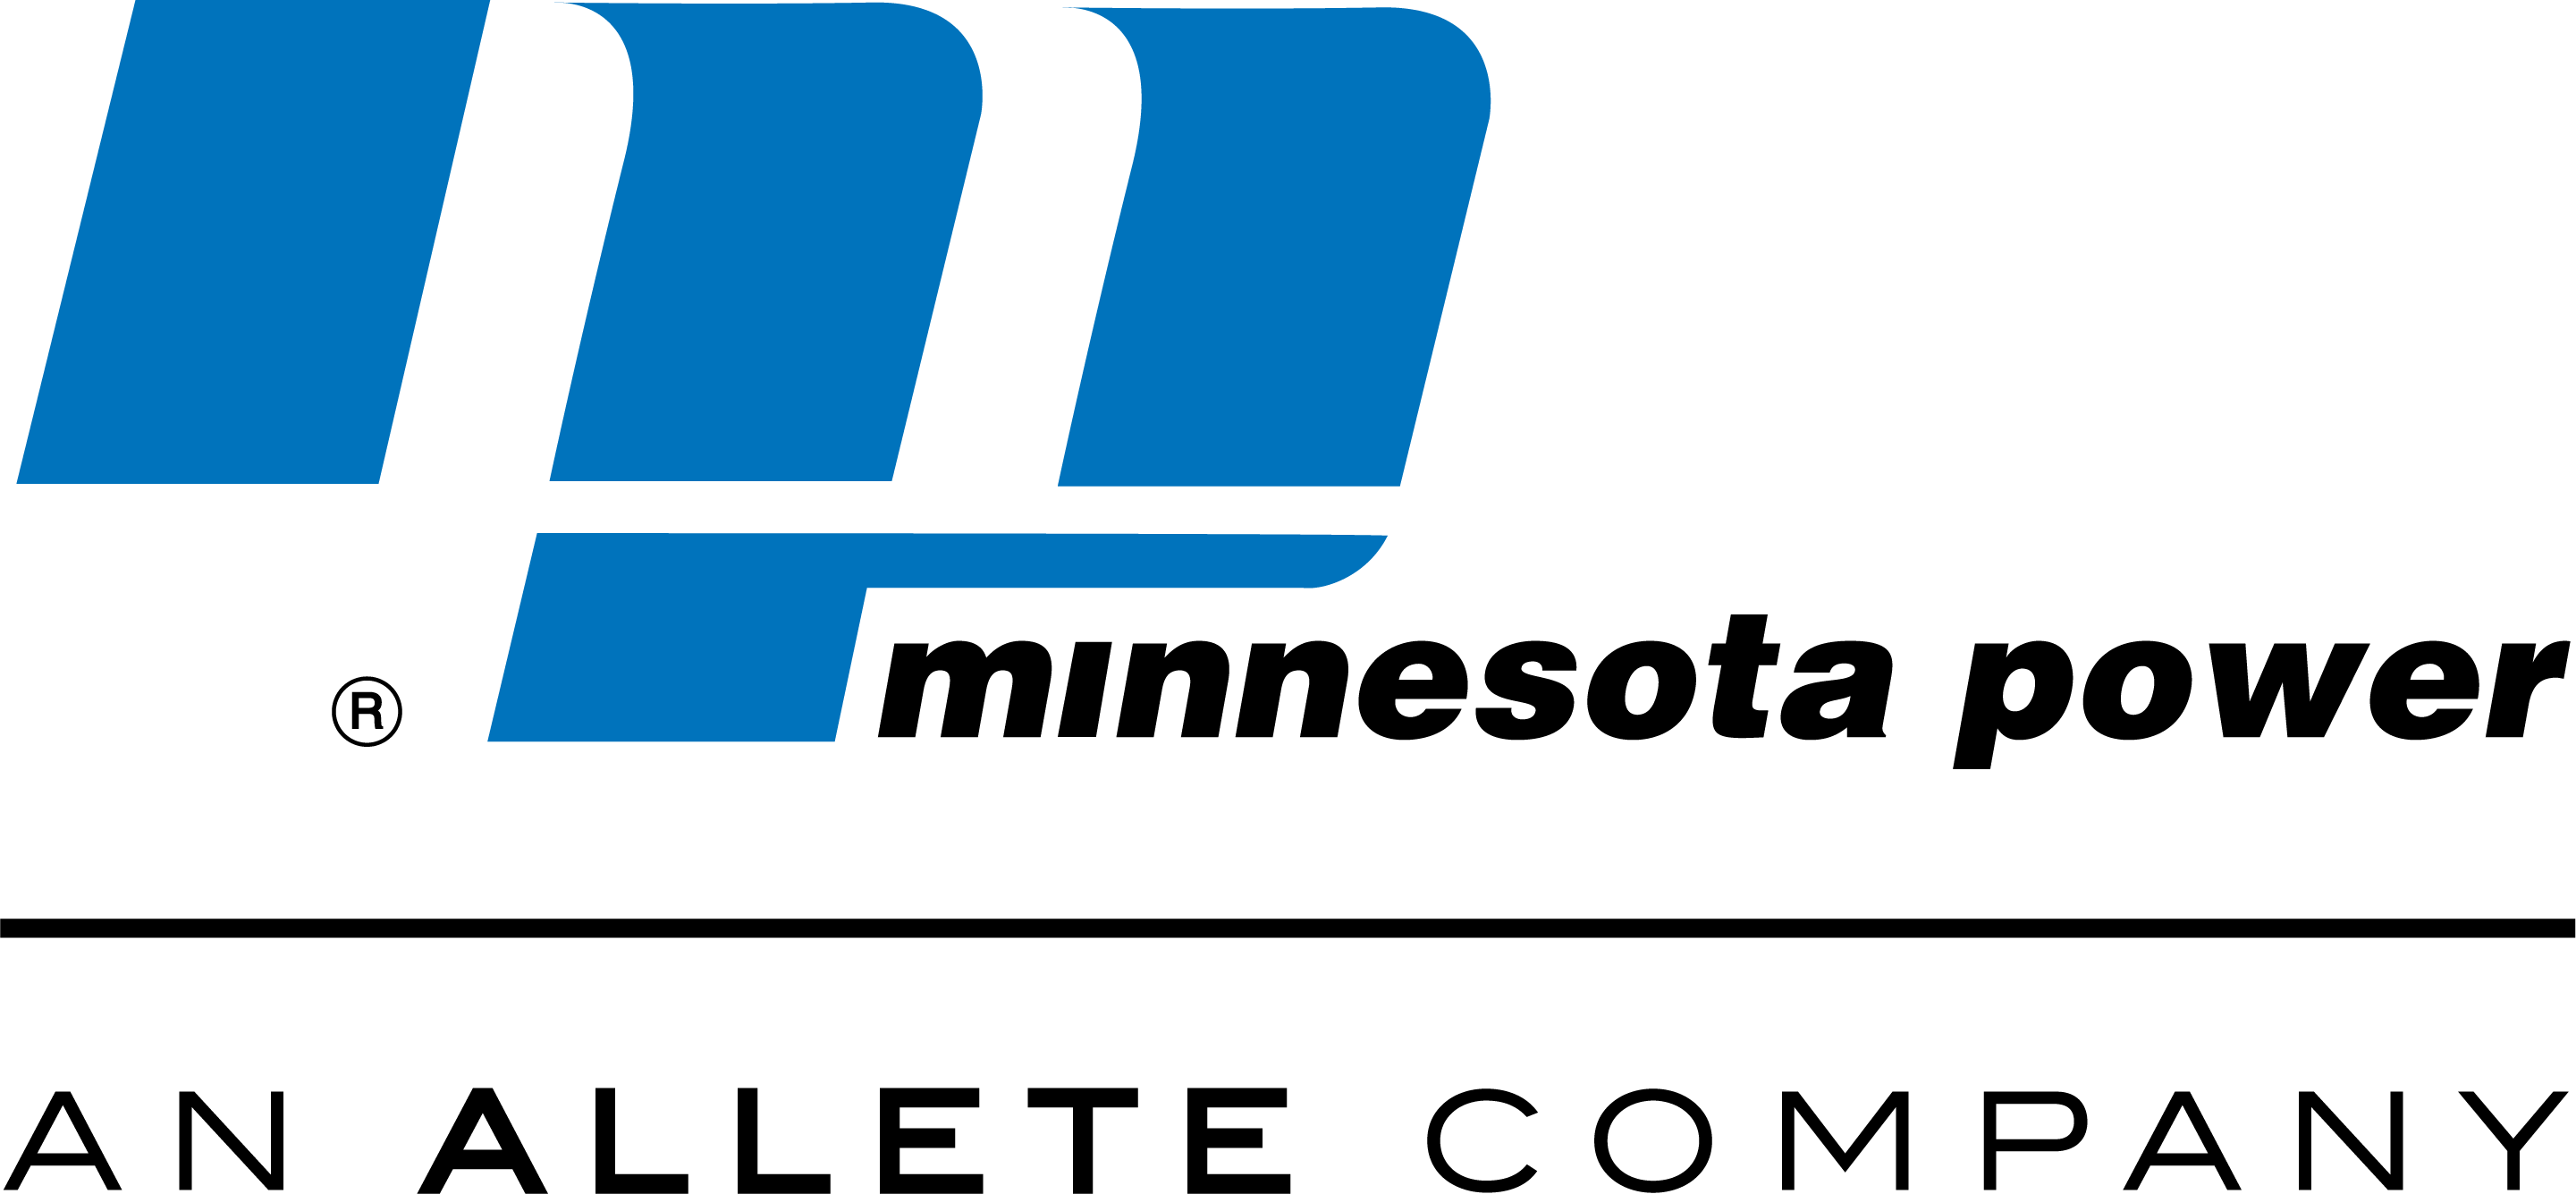 Minnesota Power logo + Allete logo